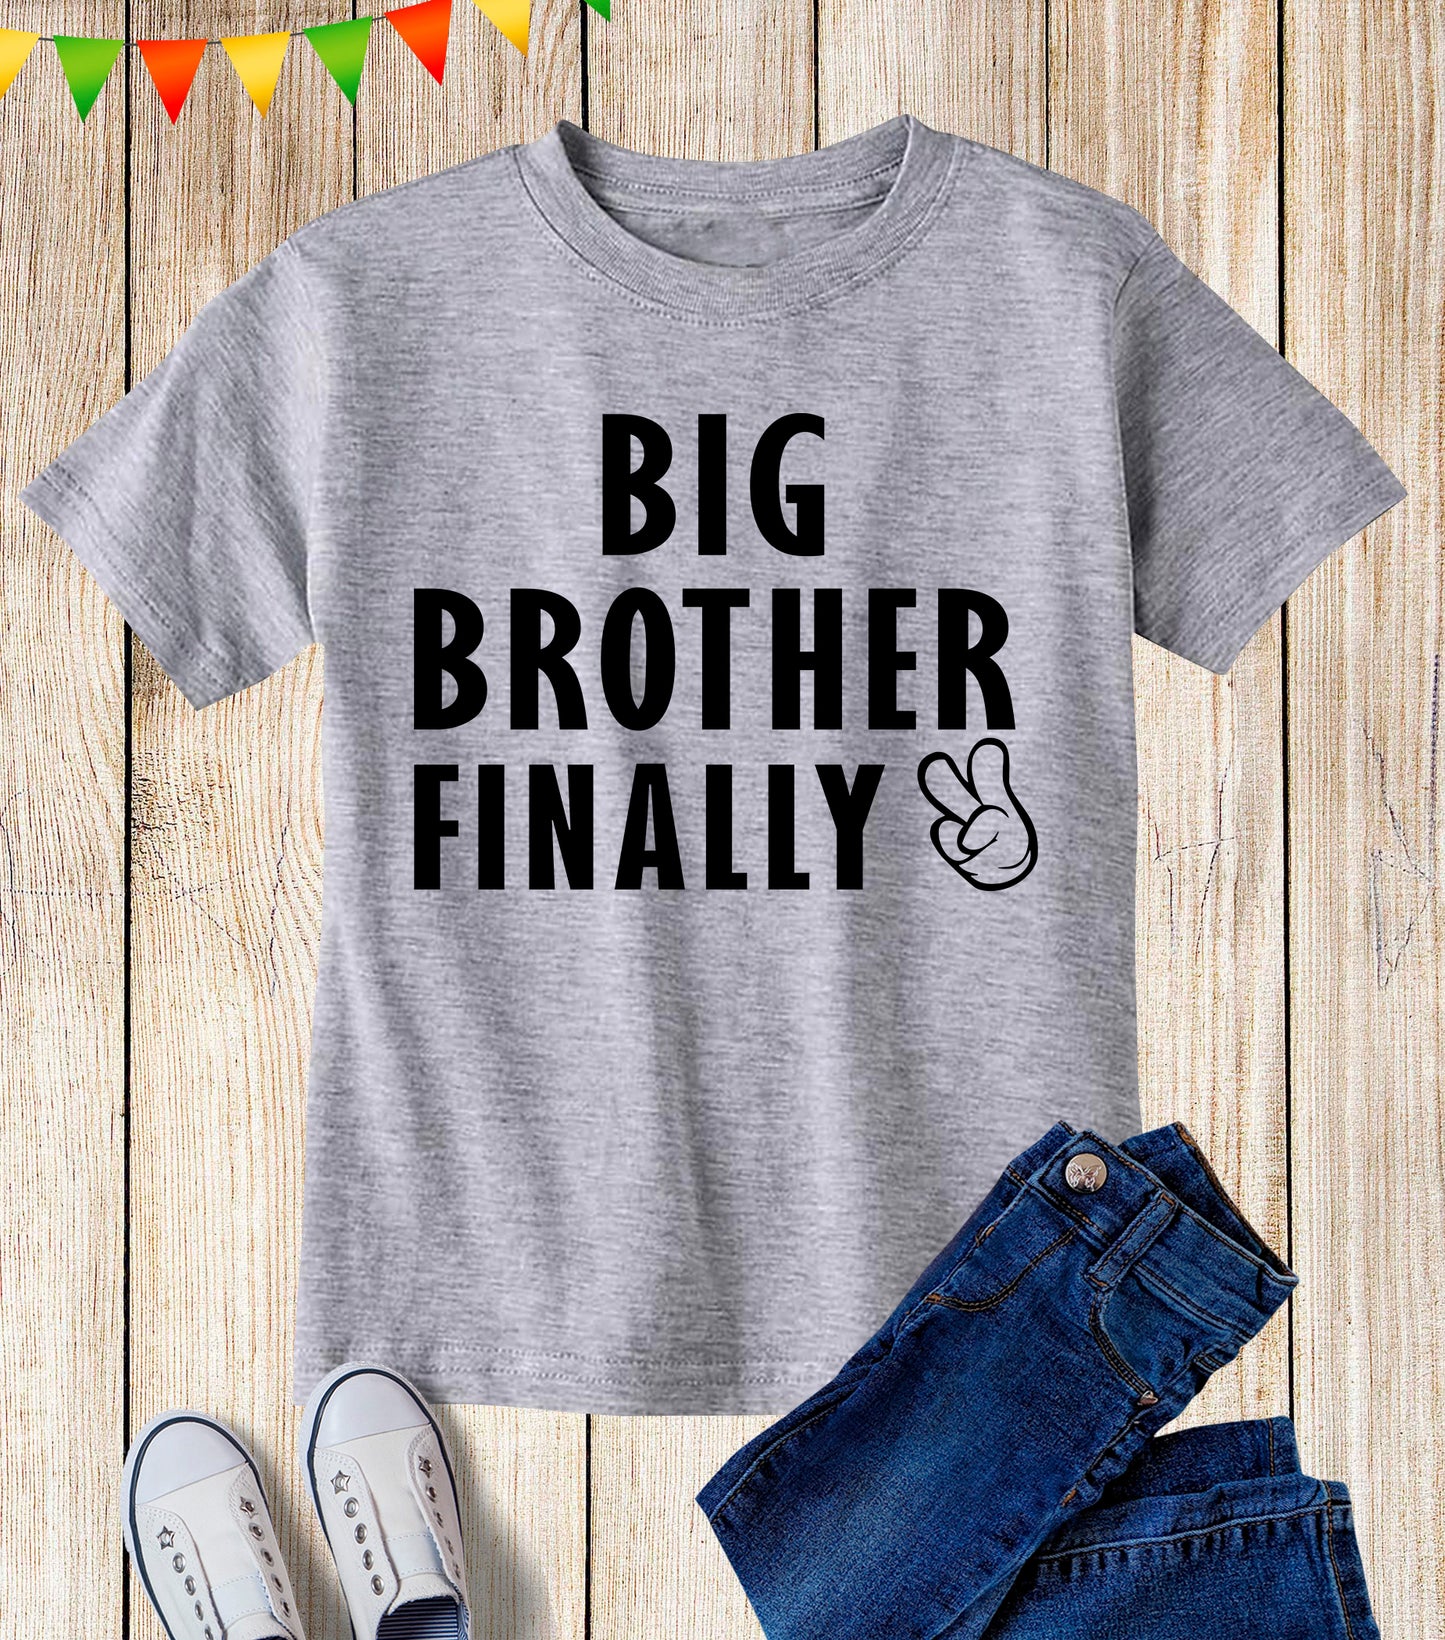 Big Brother Finally kids T Shirt